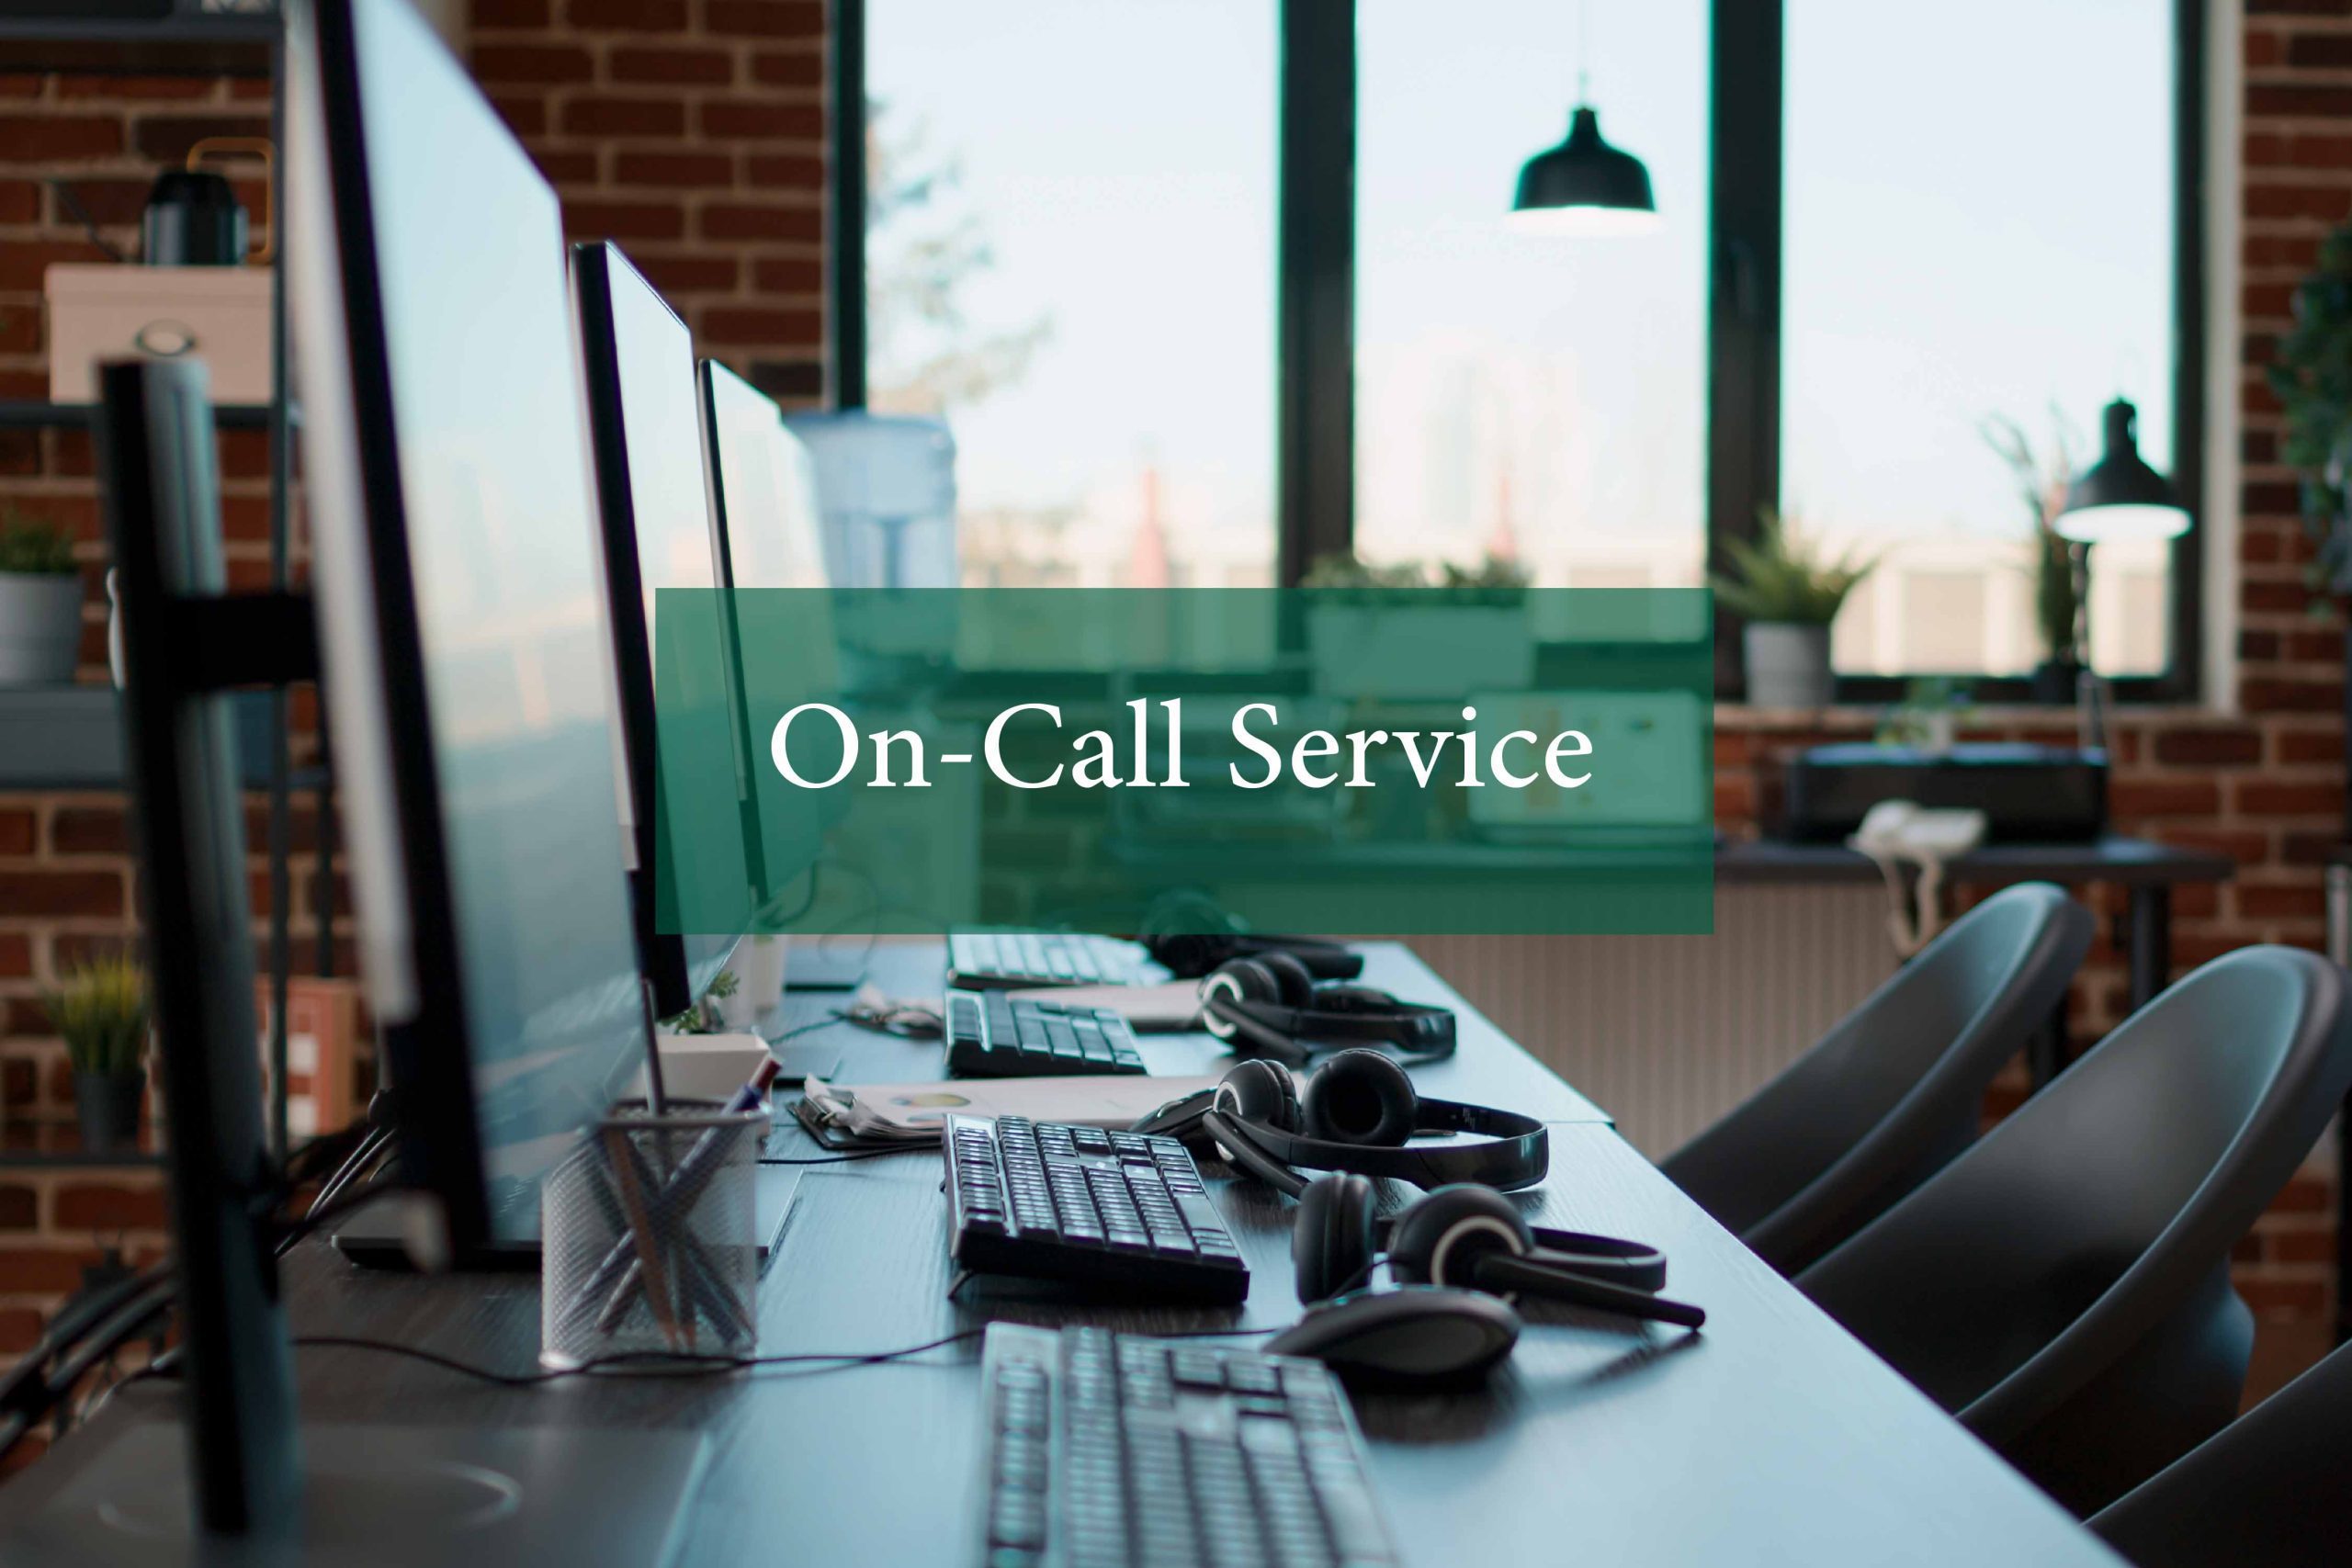 On-Call Service